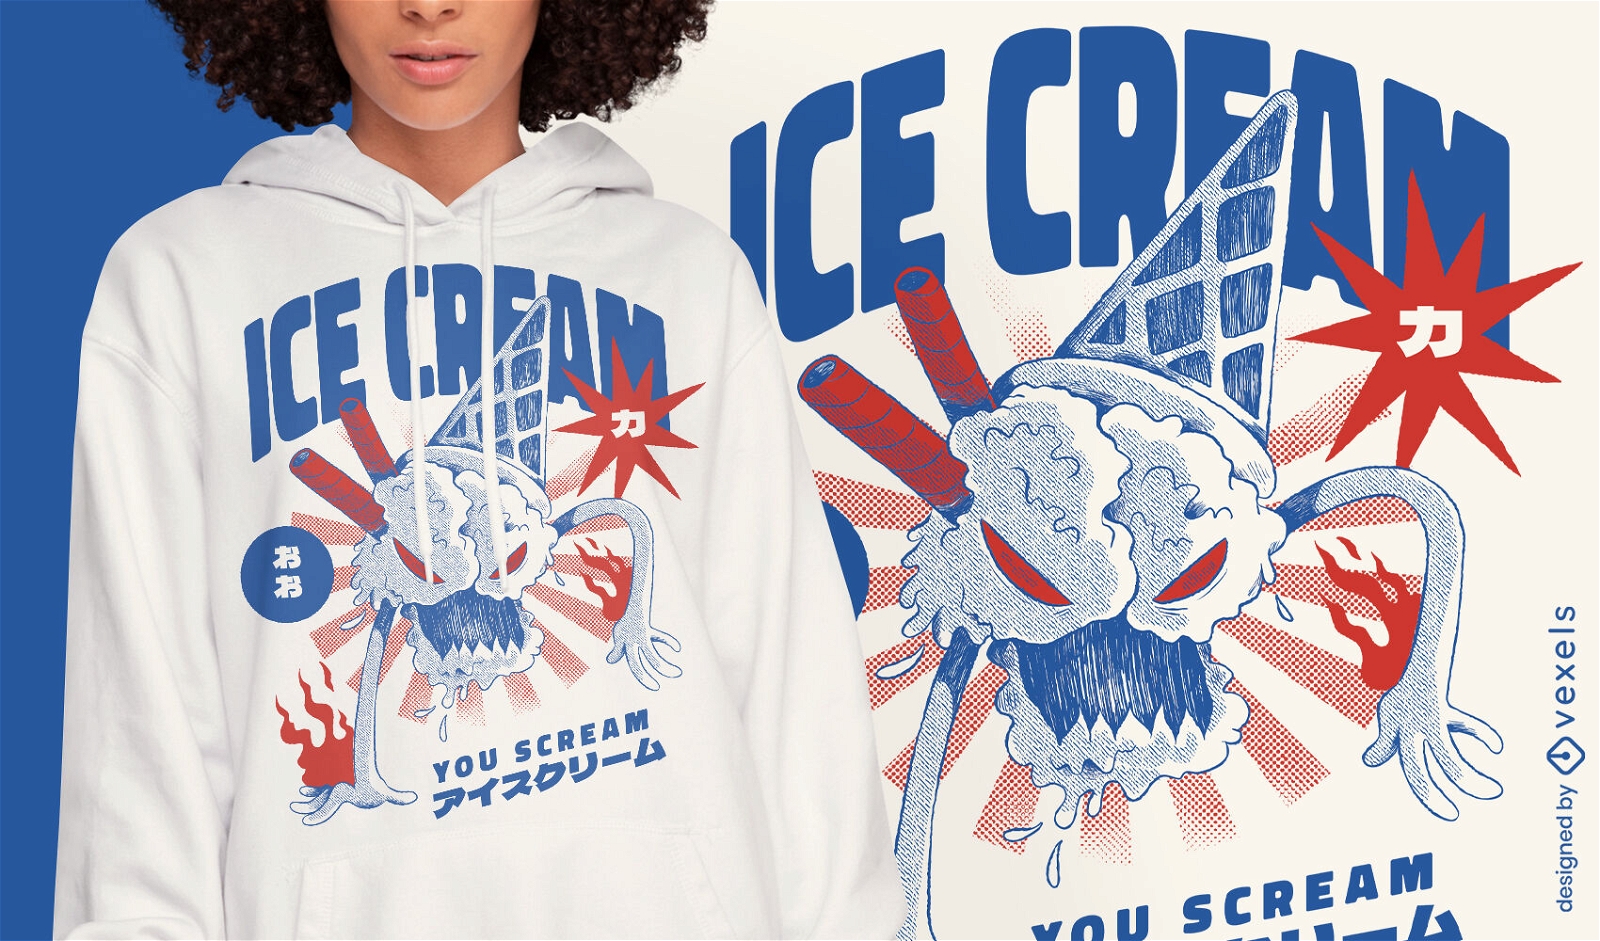 Ice cream food monster t-shirt design